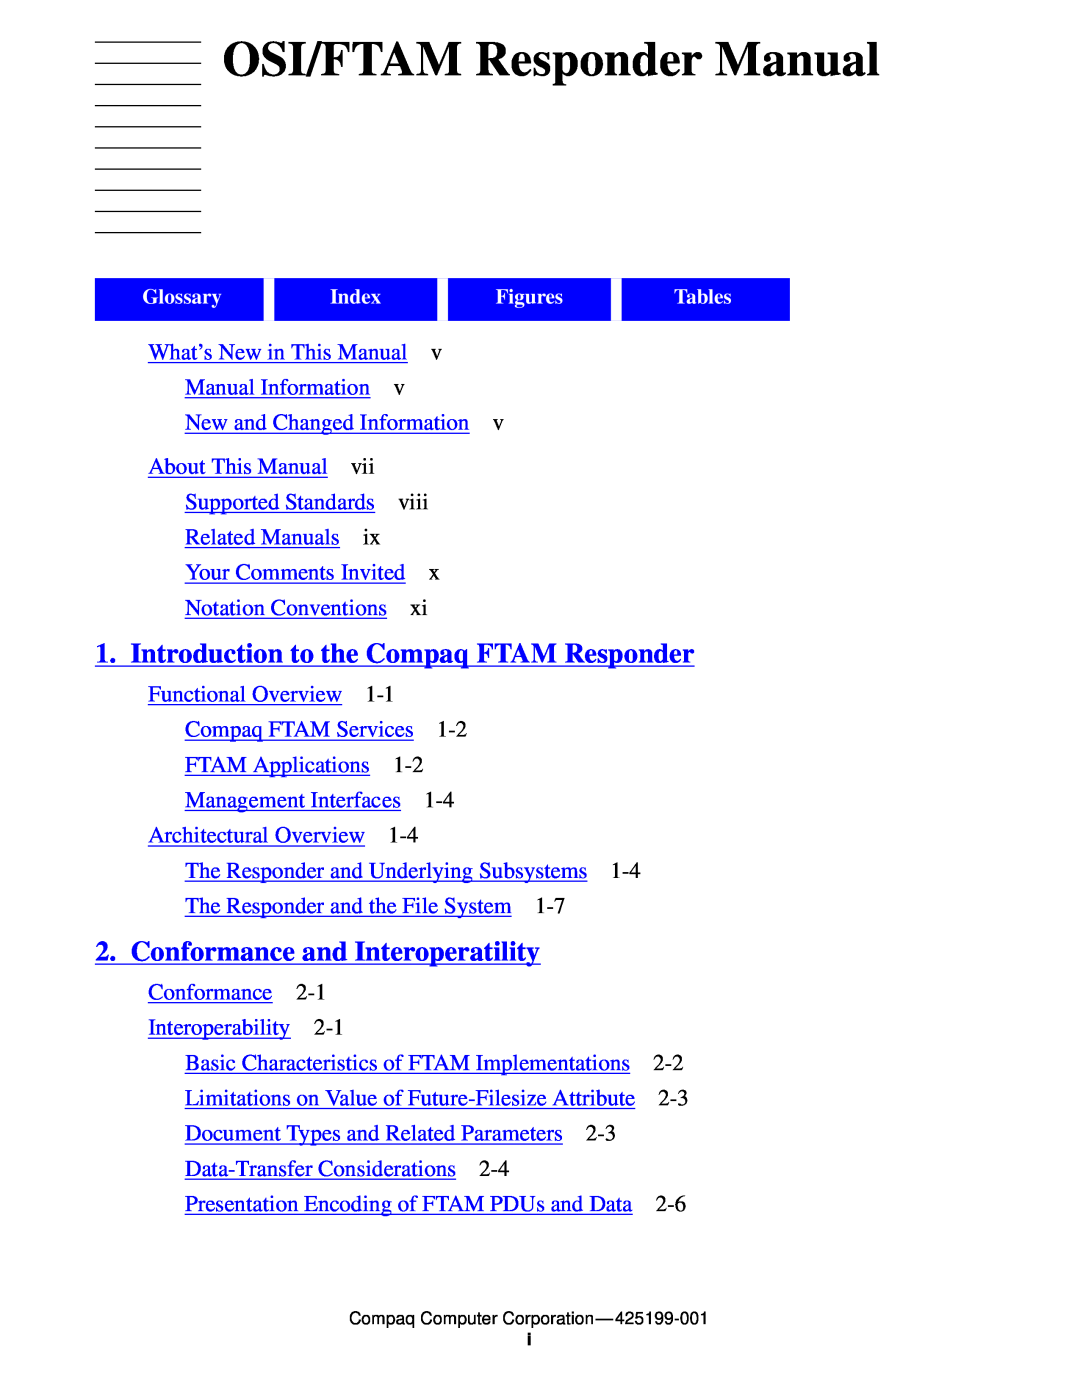 Compaq OSI/FTAM D43 OSI/FTAM Responder Manual, Introduction to the Compaq FTAM Responder, Conformance and Interoperatility 